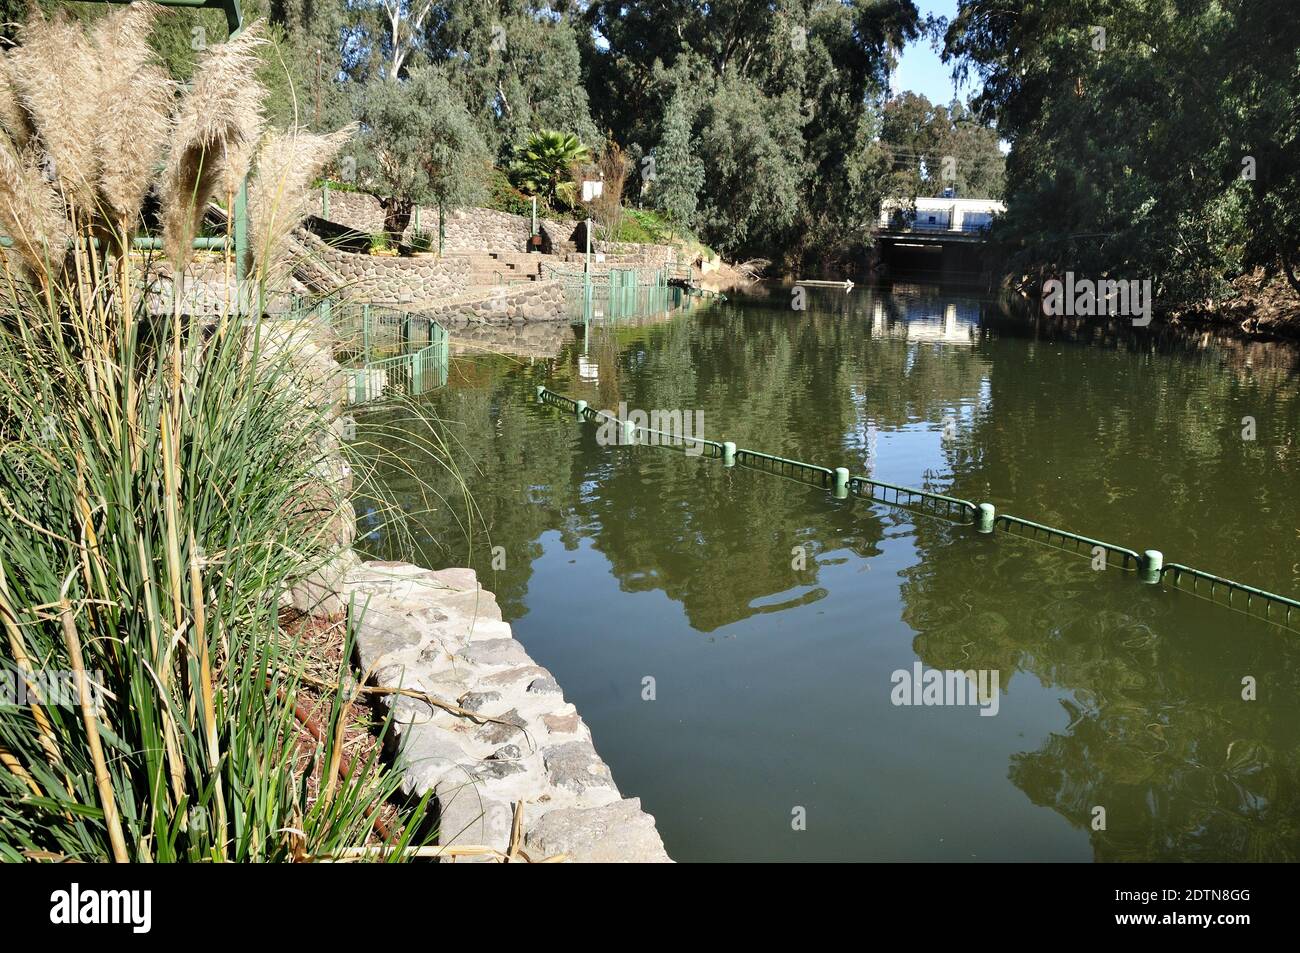 Baptismal site at Jordan river shore. Israel. Stock Photo